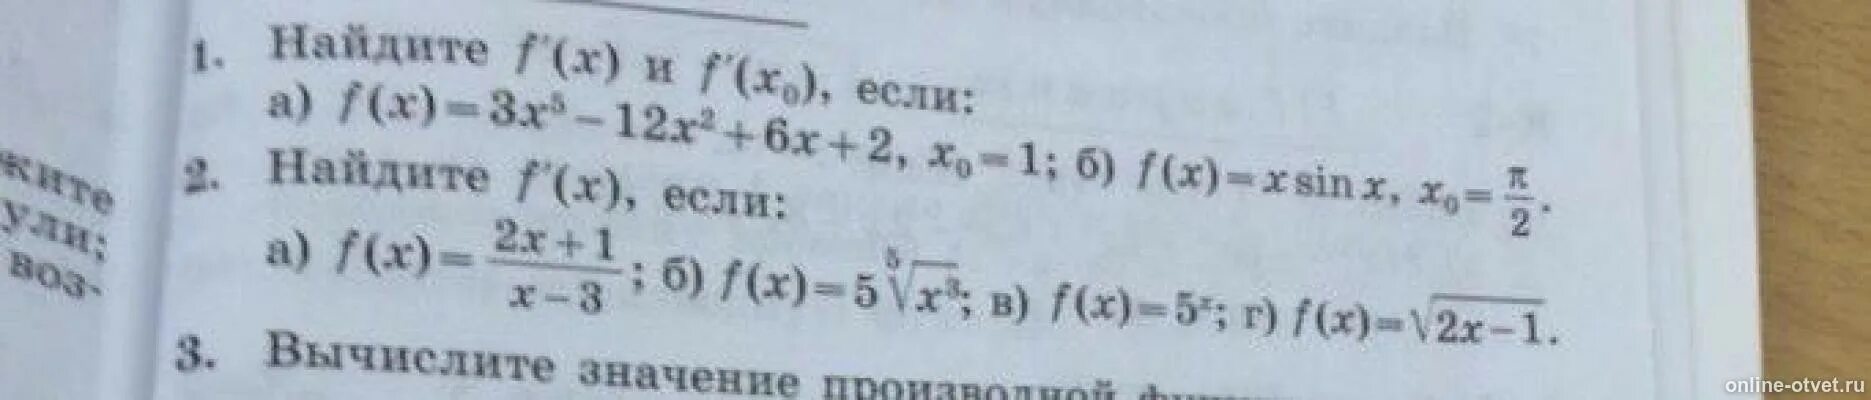 F 2x 3 4x 5. Найти f x0 если. Найти f x если. F(X) 3 В степени x-5 +2. Найдите f х и f х0 если f x.